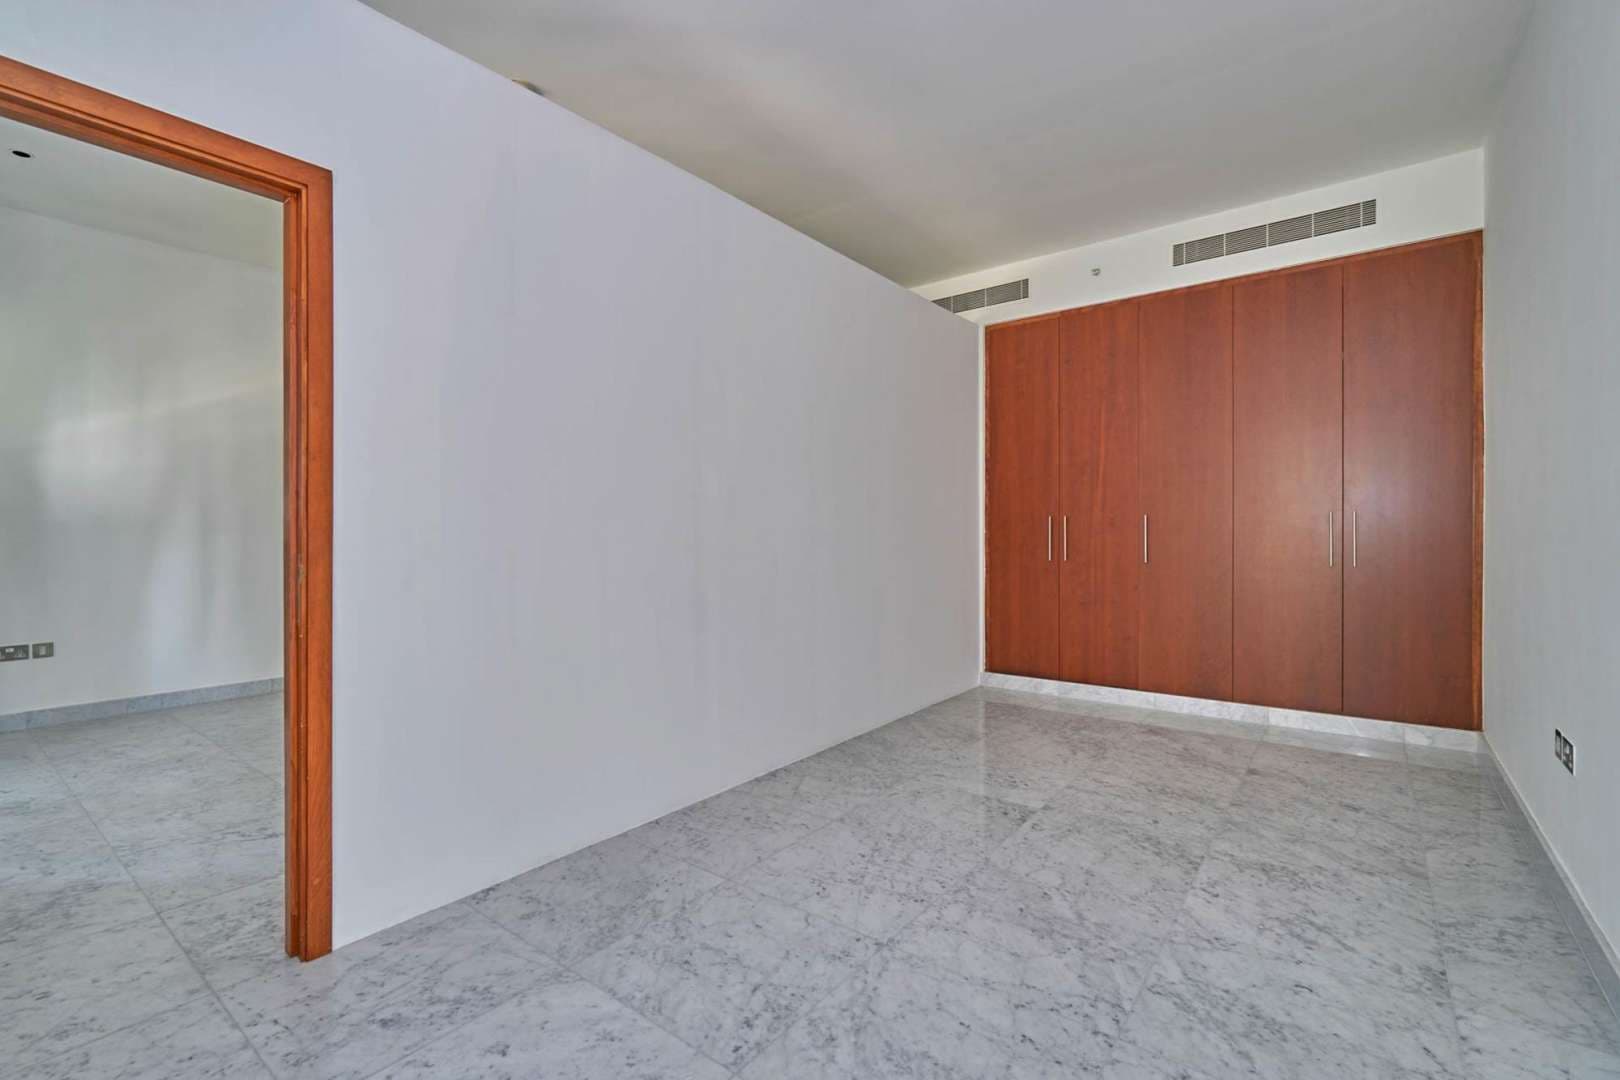 1 Bedroom Apartment For Rent Central Park Tower Lp05835 1f96e172deaf6c00.jpg